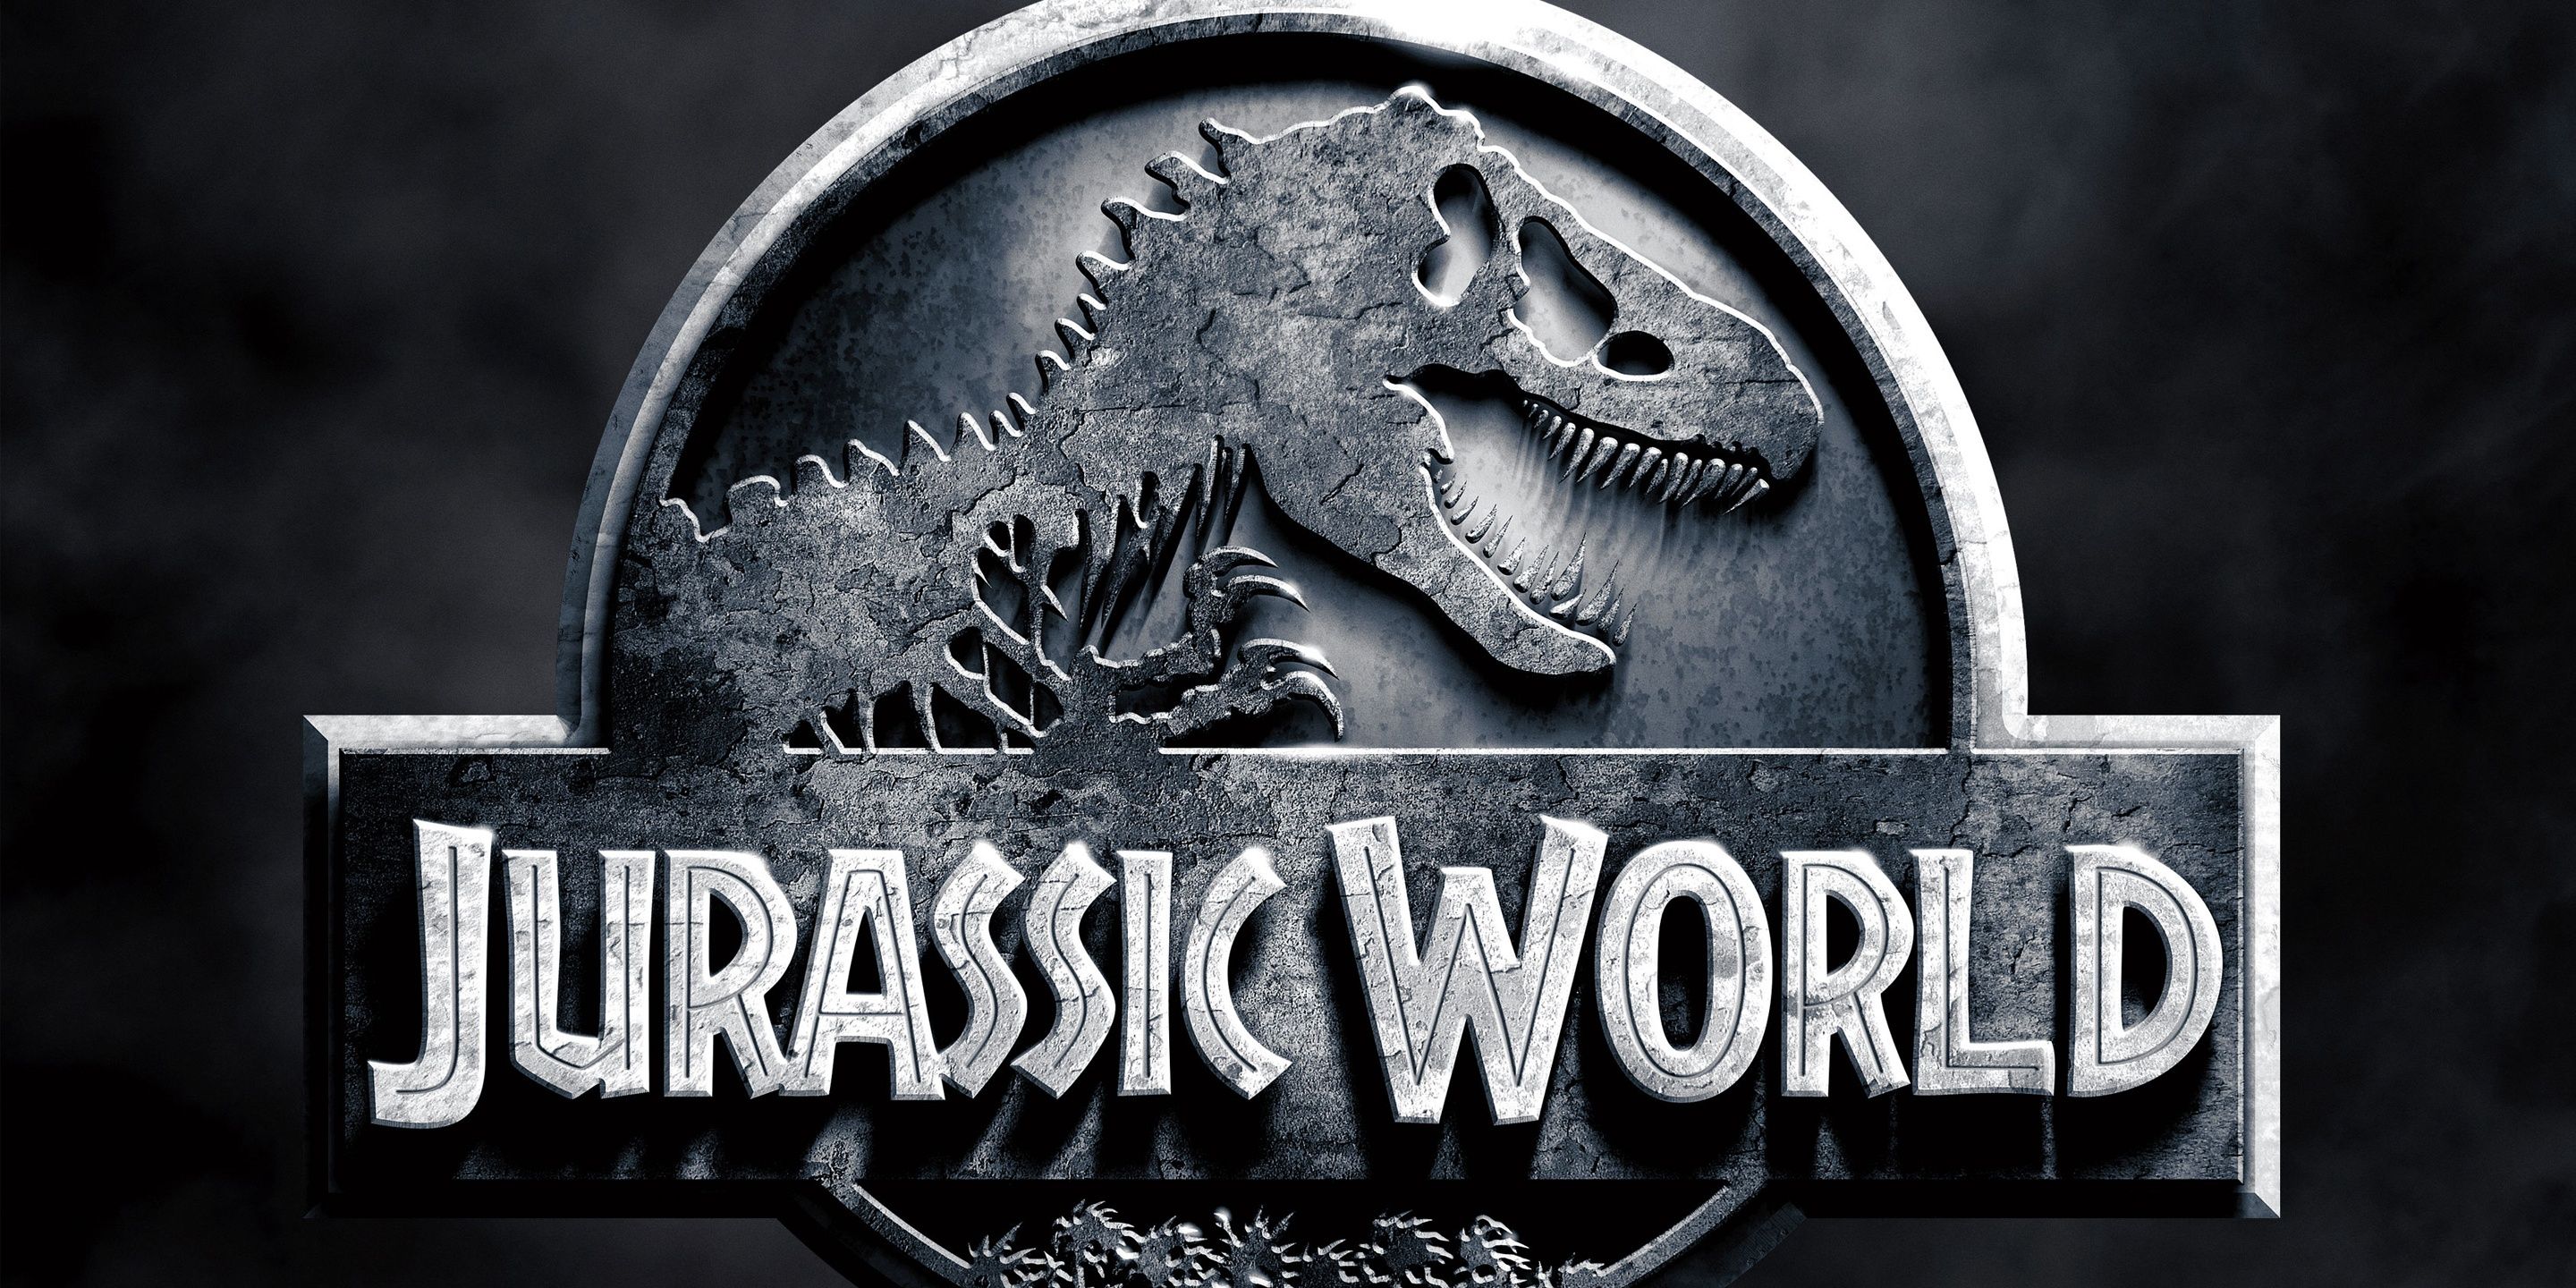 Jurassic World iconic logo with dinosaur in stone